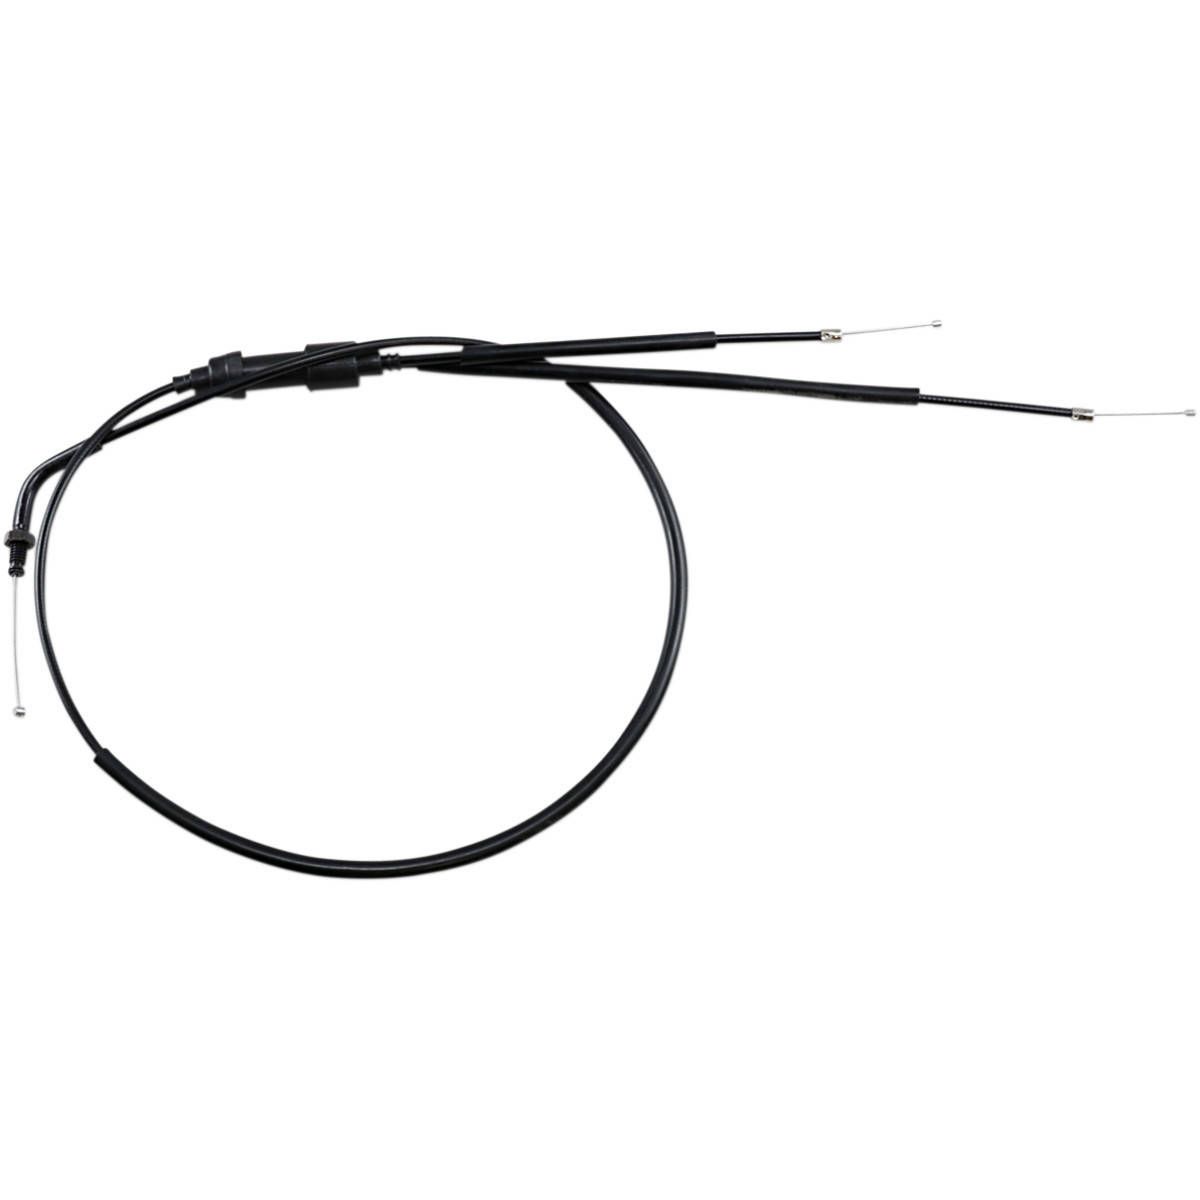 Black Vinyl Choke Cable Fits 1995-1999 Honda VT1100C2 Shadow ACE 